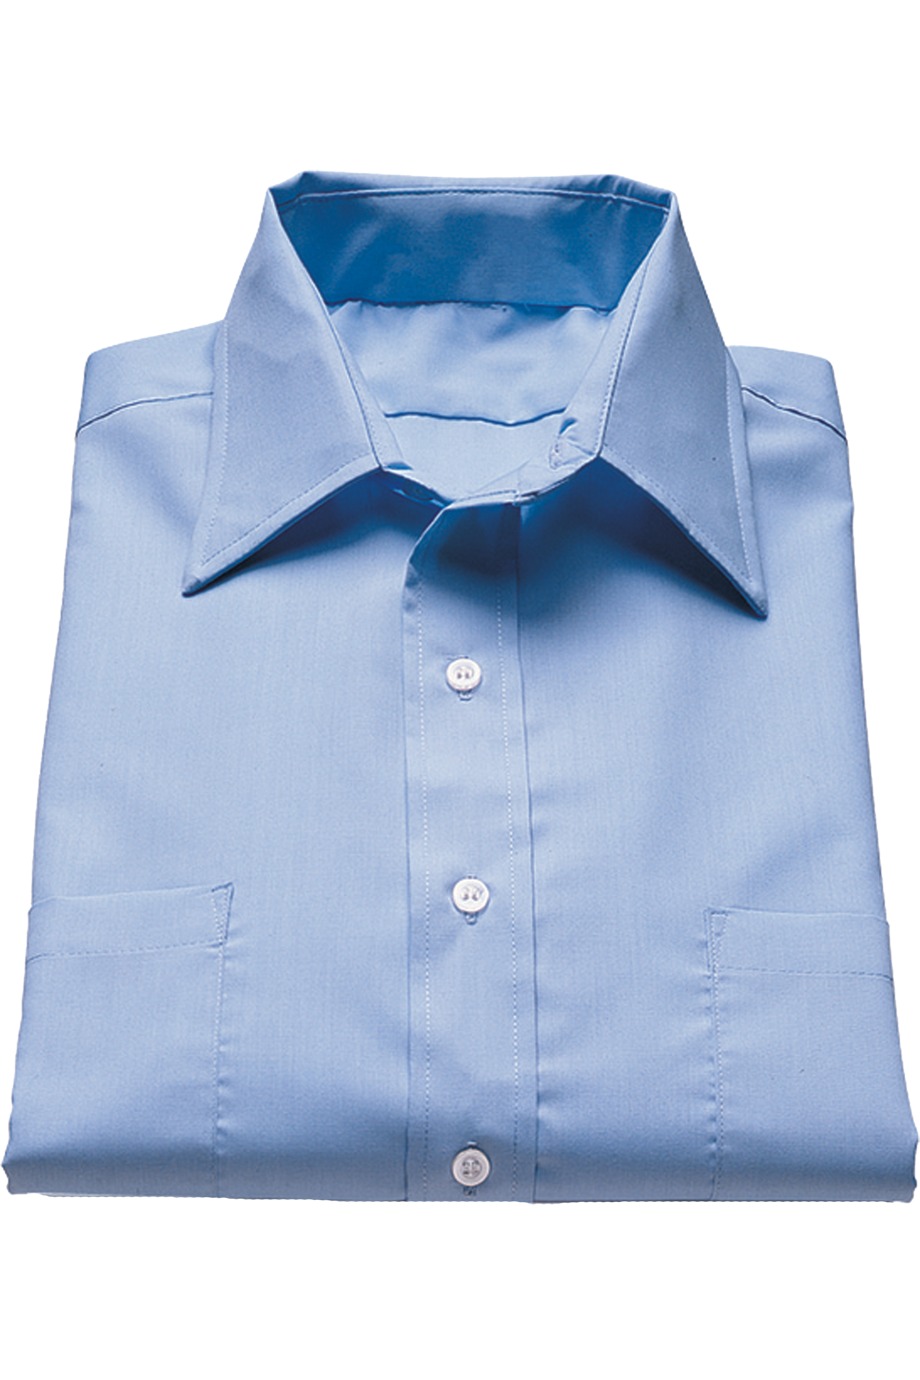 Edwards Garment 1110 - Men's Traditional Long Sleeve Broadcloth Shirt